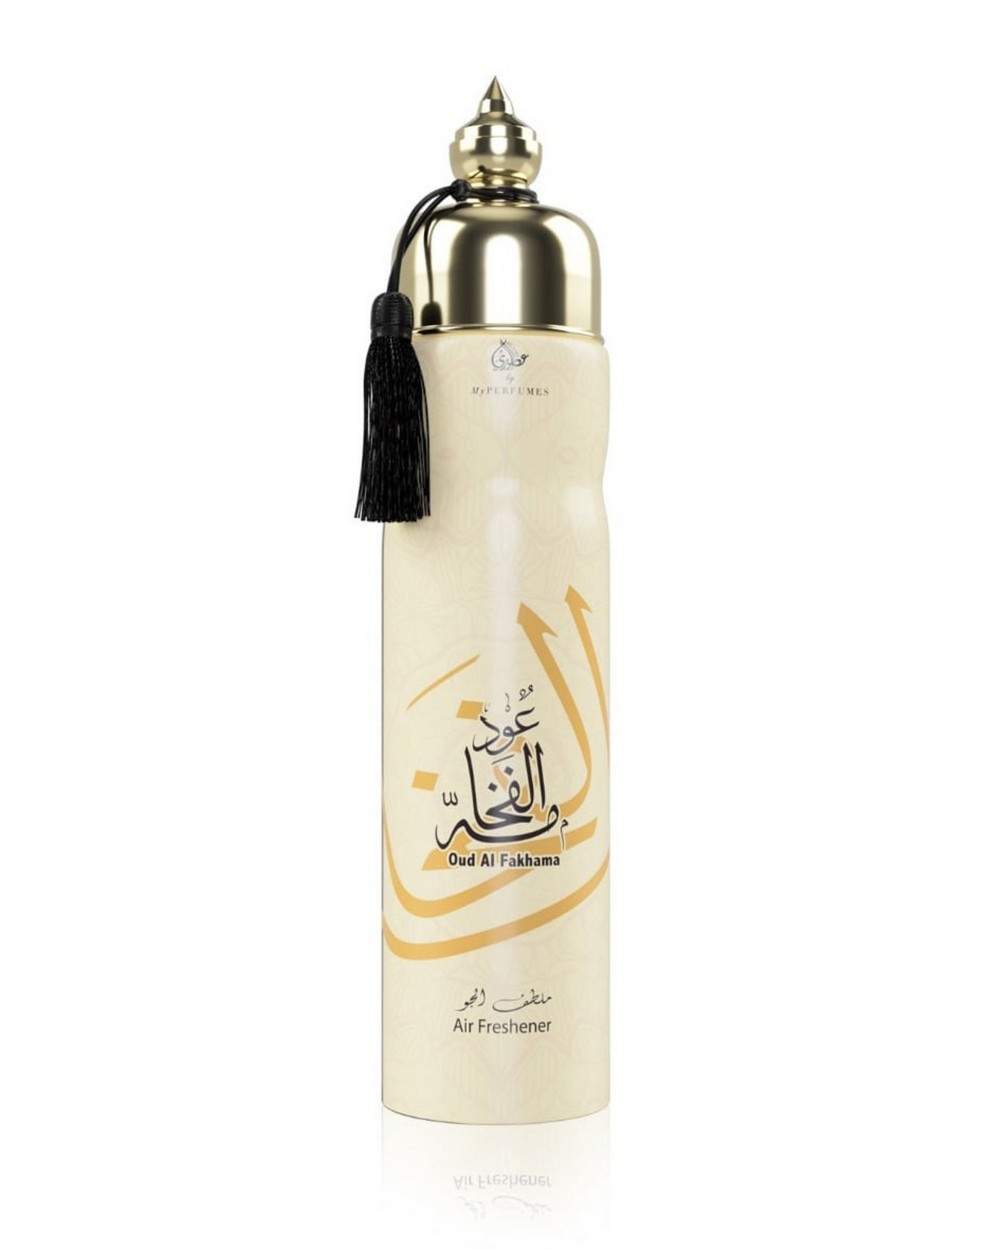 Interior spray 300 ml My perfumes " Oud Al fakhama "